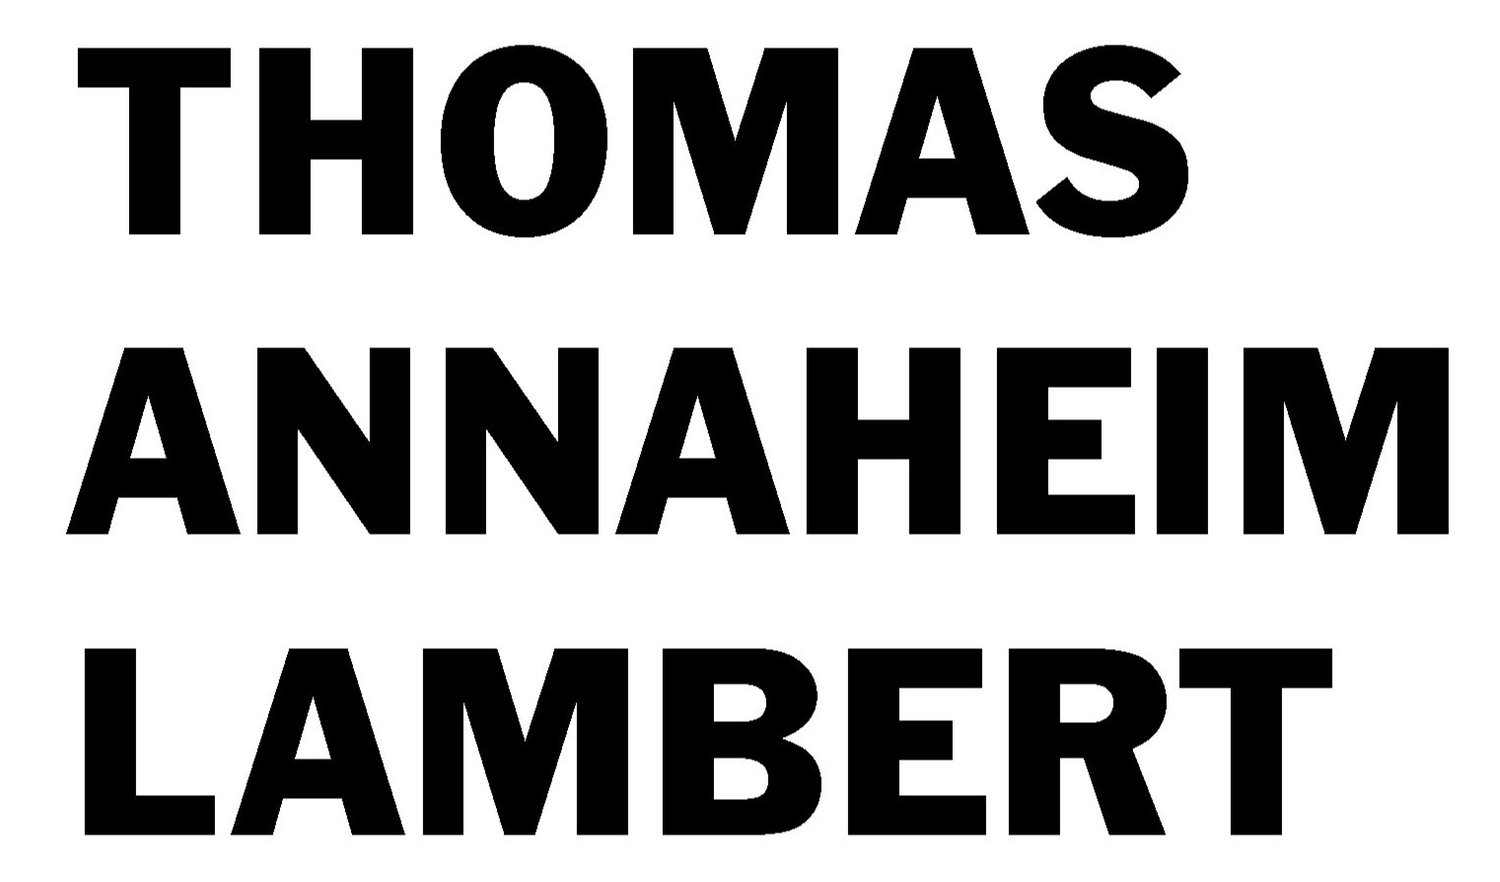 Thomas Annaheim Lambert